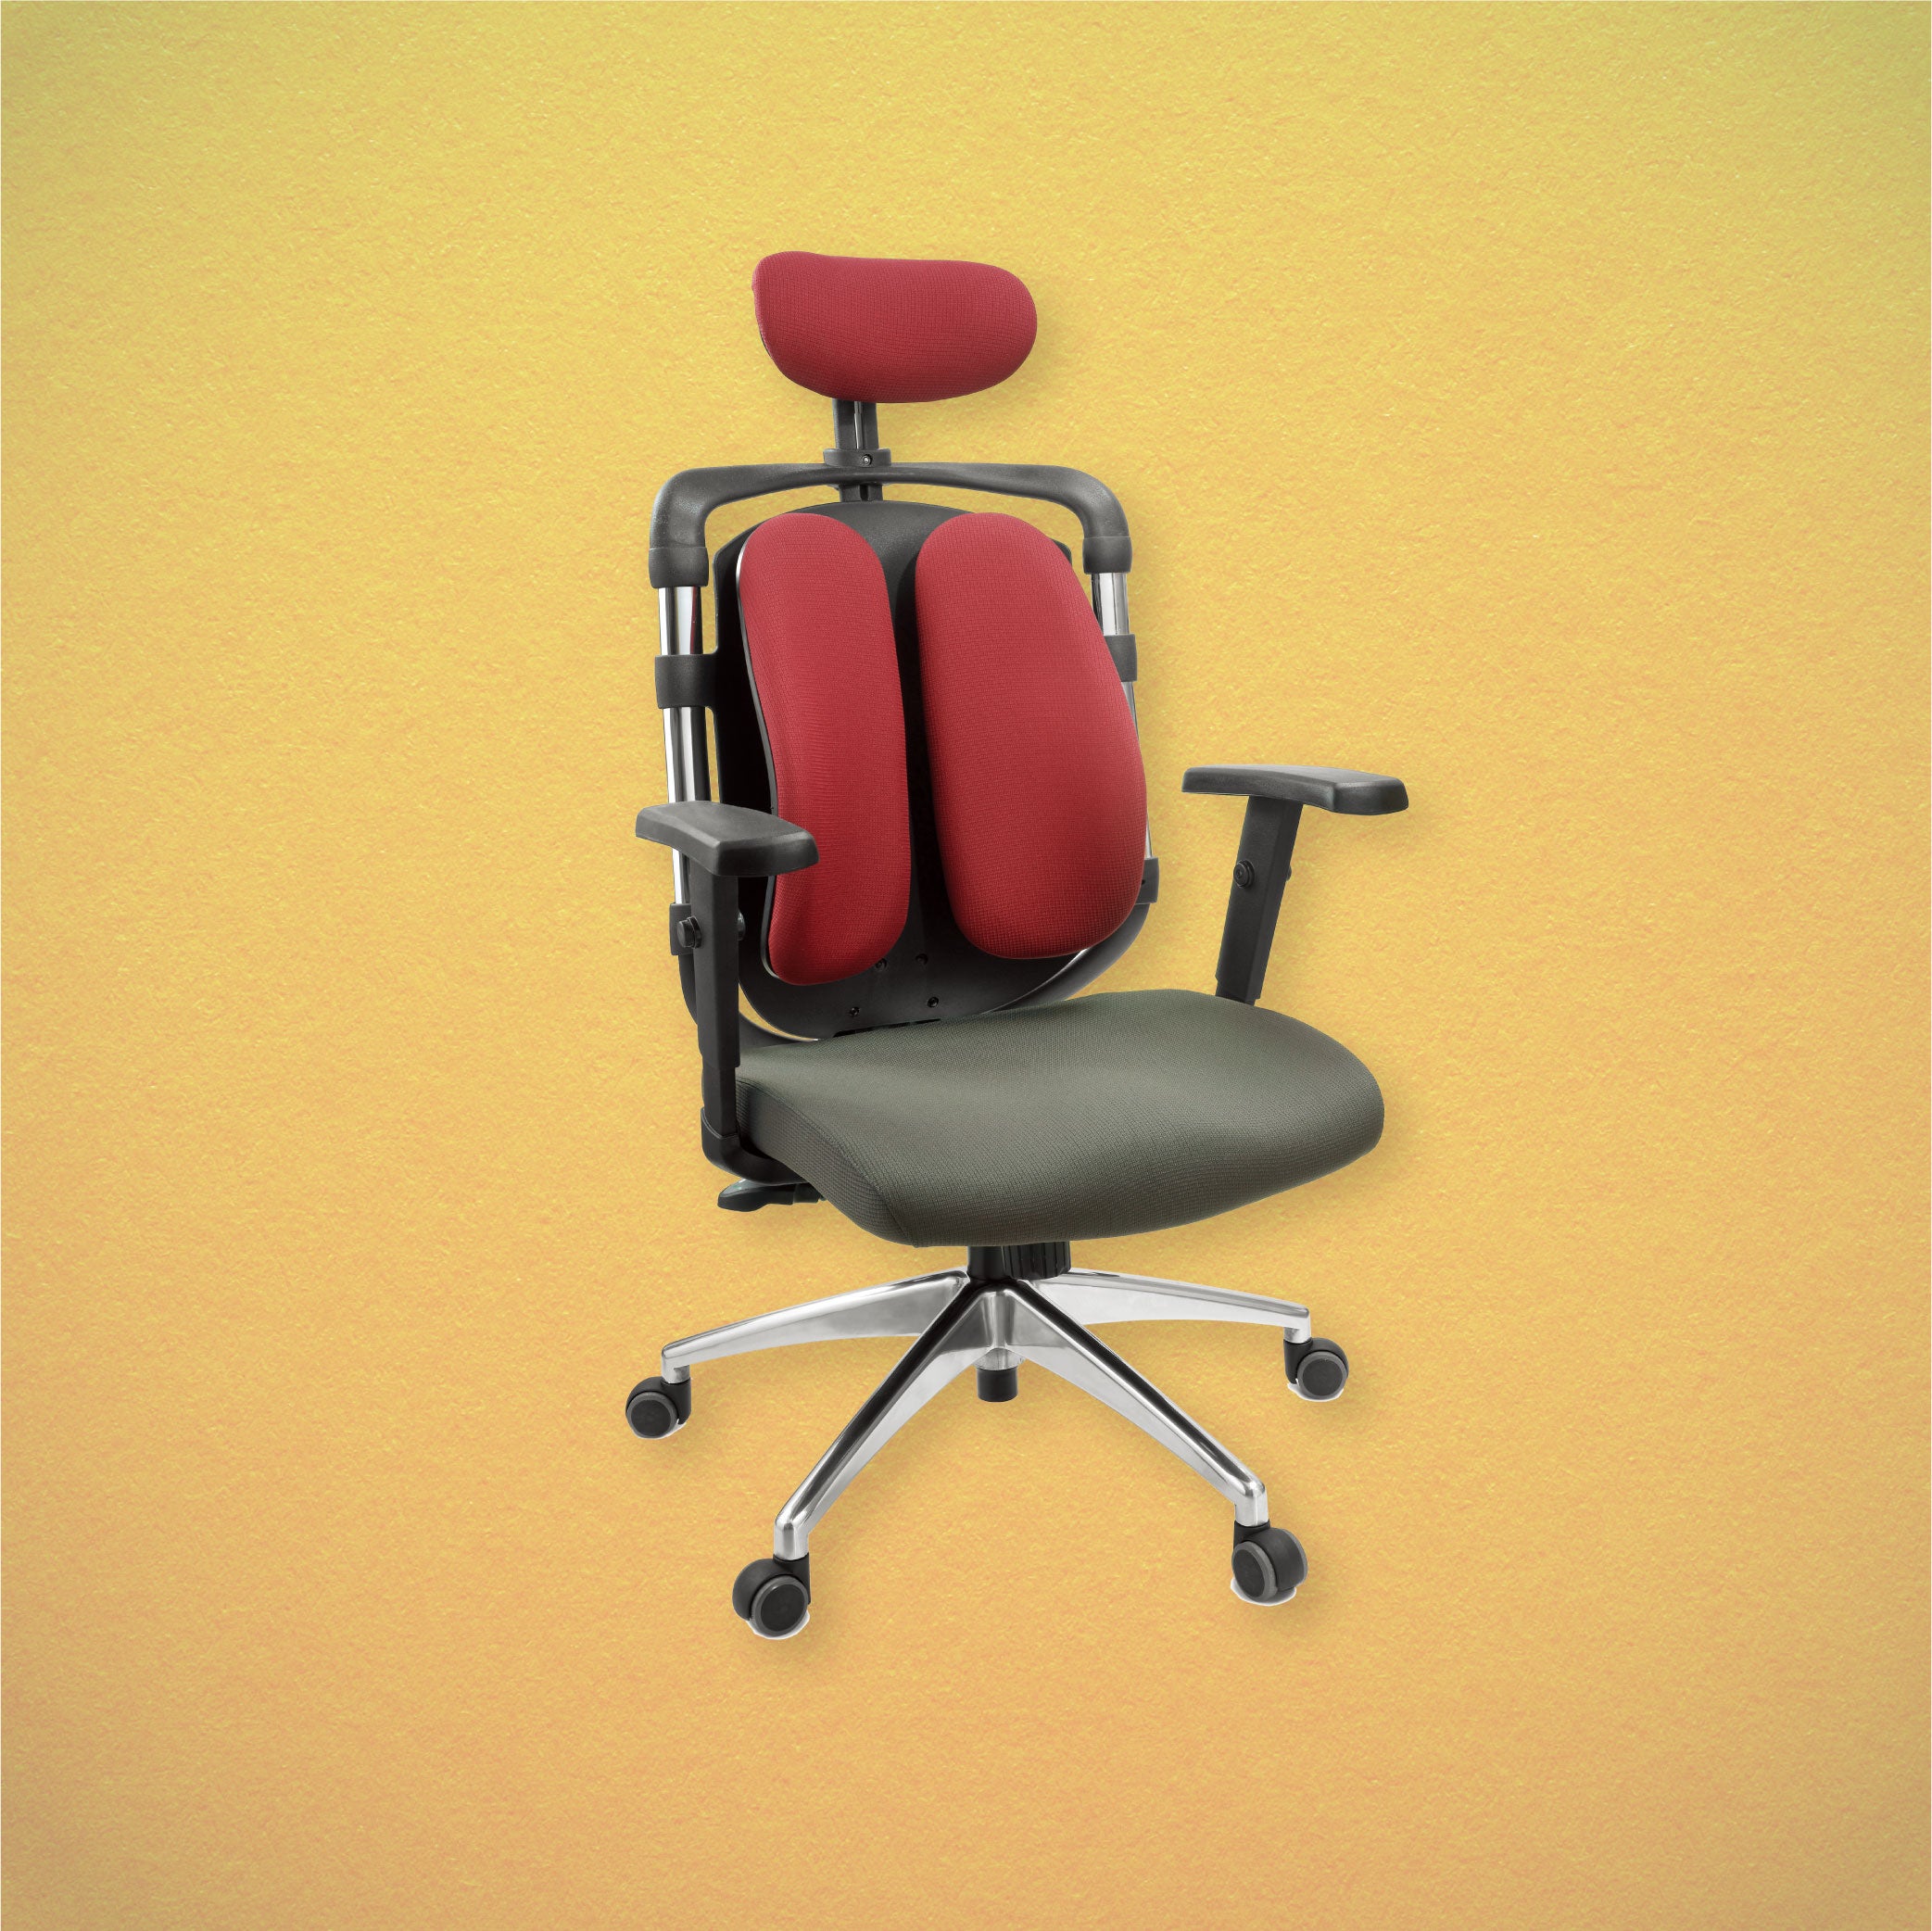 Ergonomic Design Chair (Advanced) - Maroon